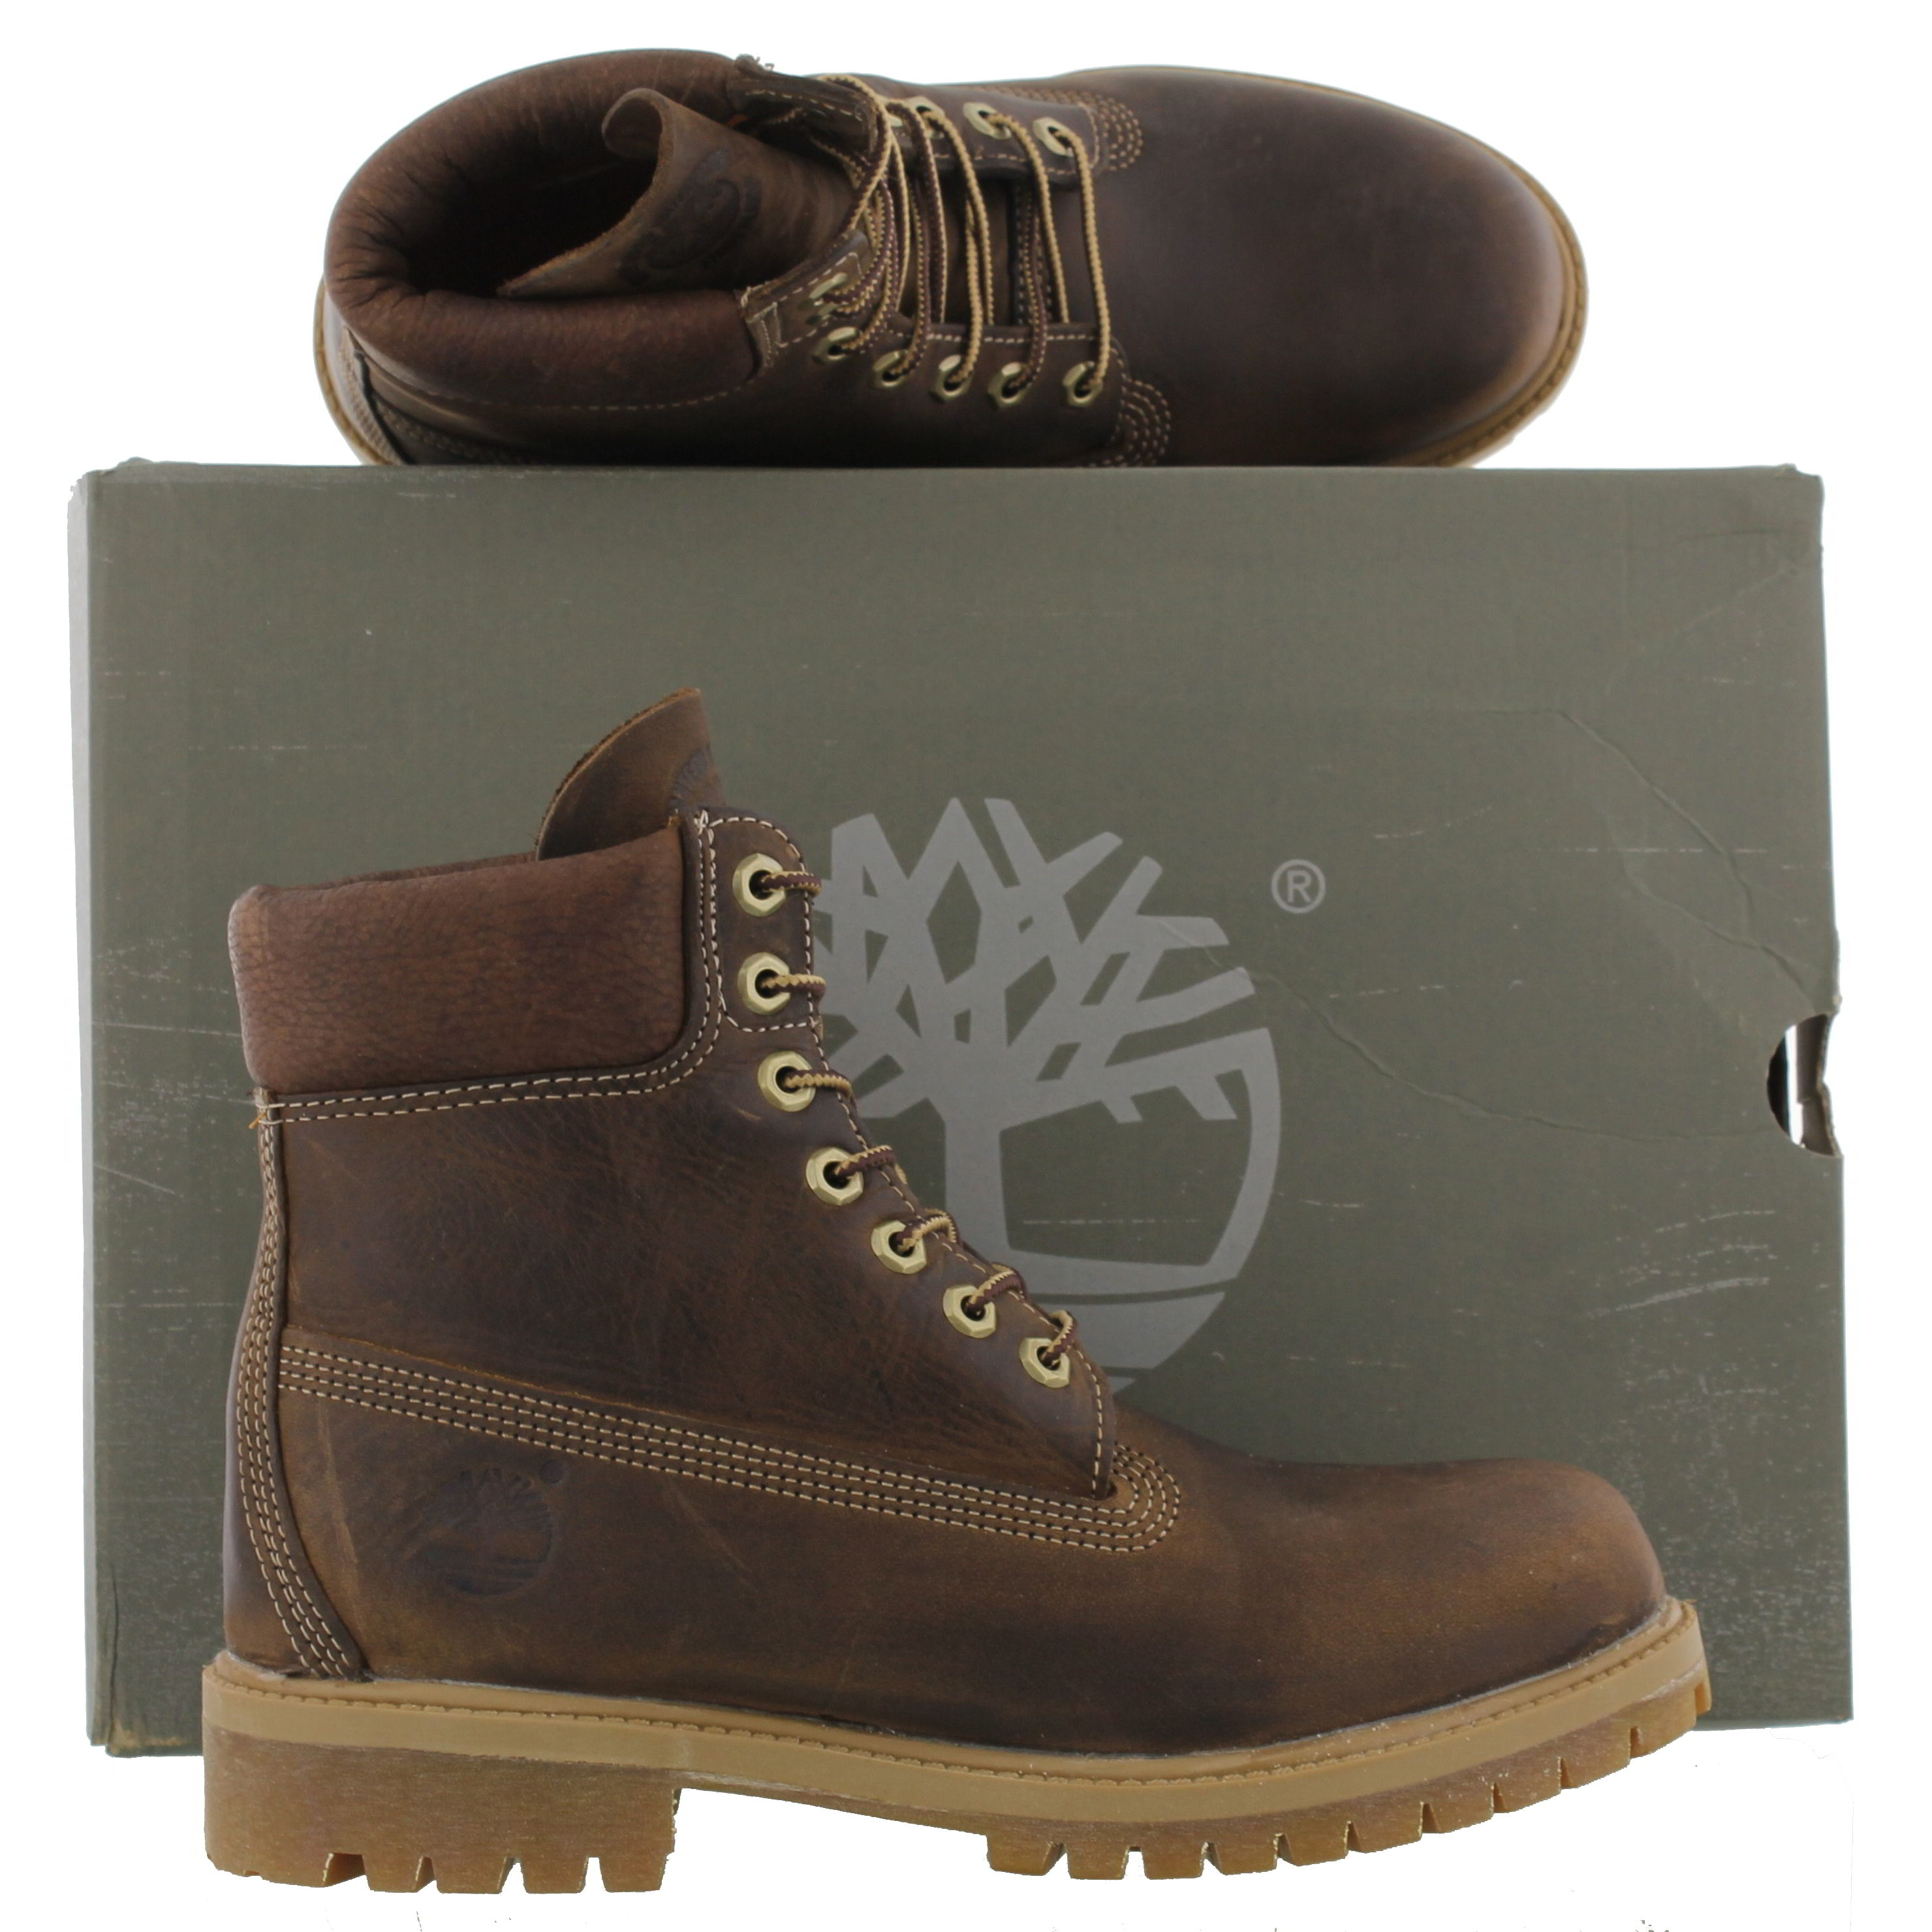 Timberland Mens 6 Inch Premium Waterproof Boots - 27097 -Brown 2951